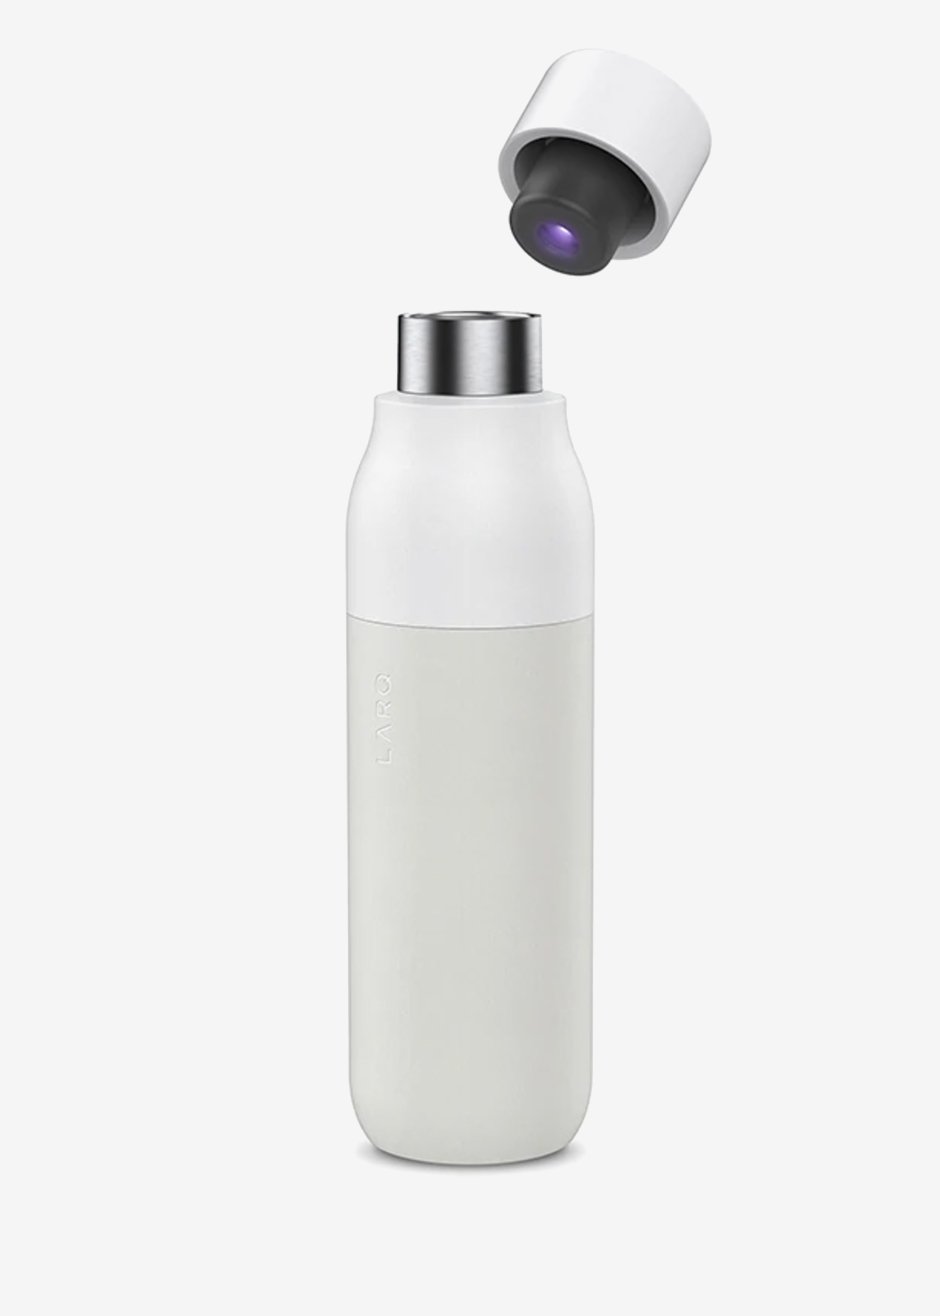 LARQ x TFS Self-Cleaning Water Bottle - Granite White - 7